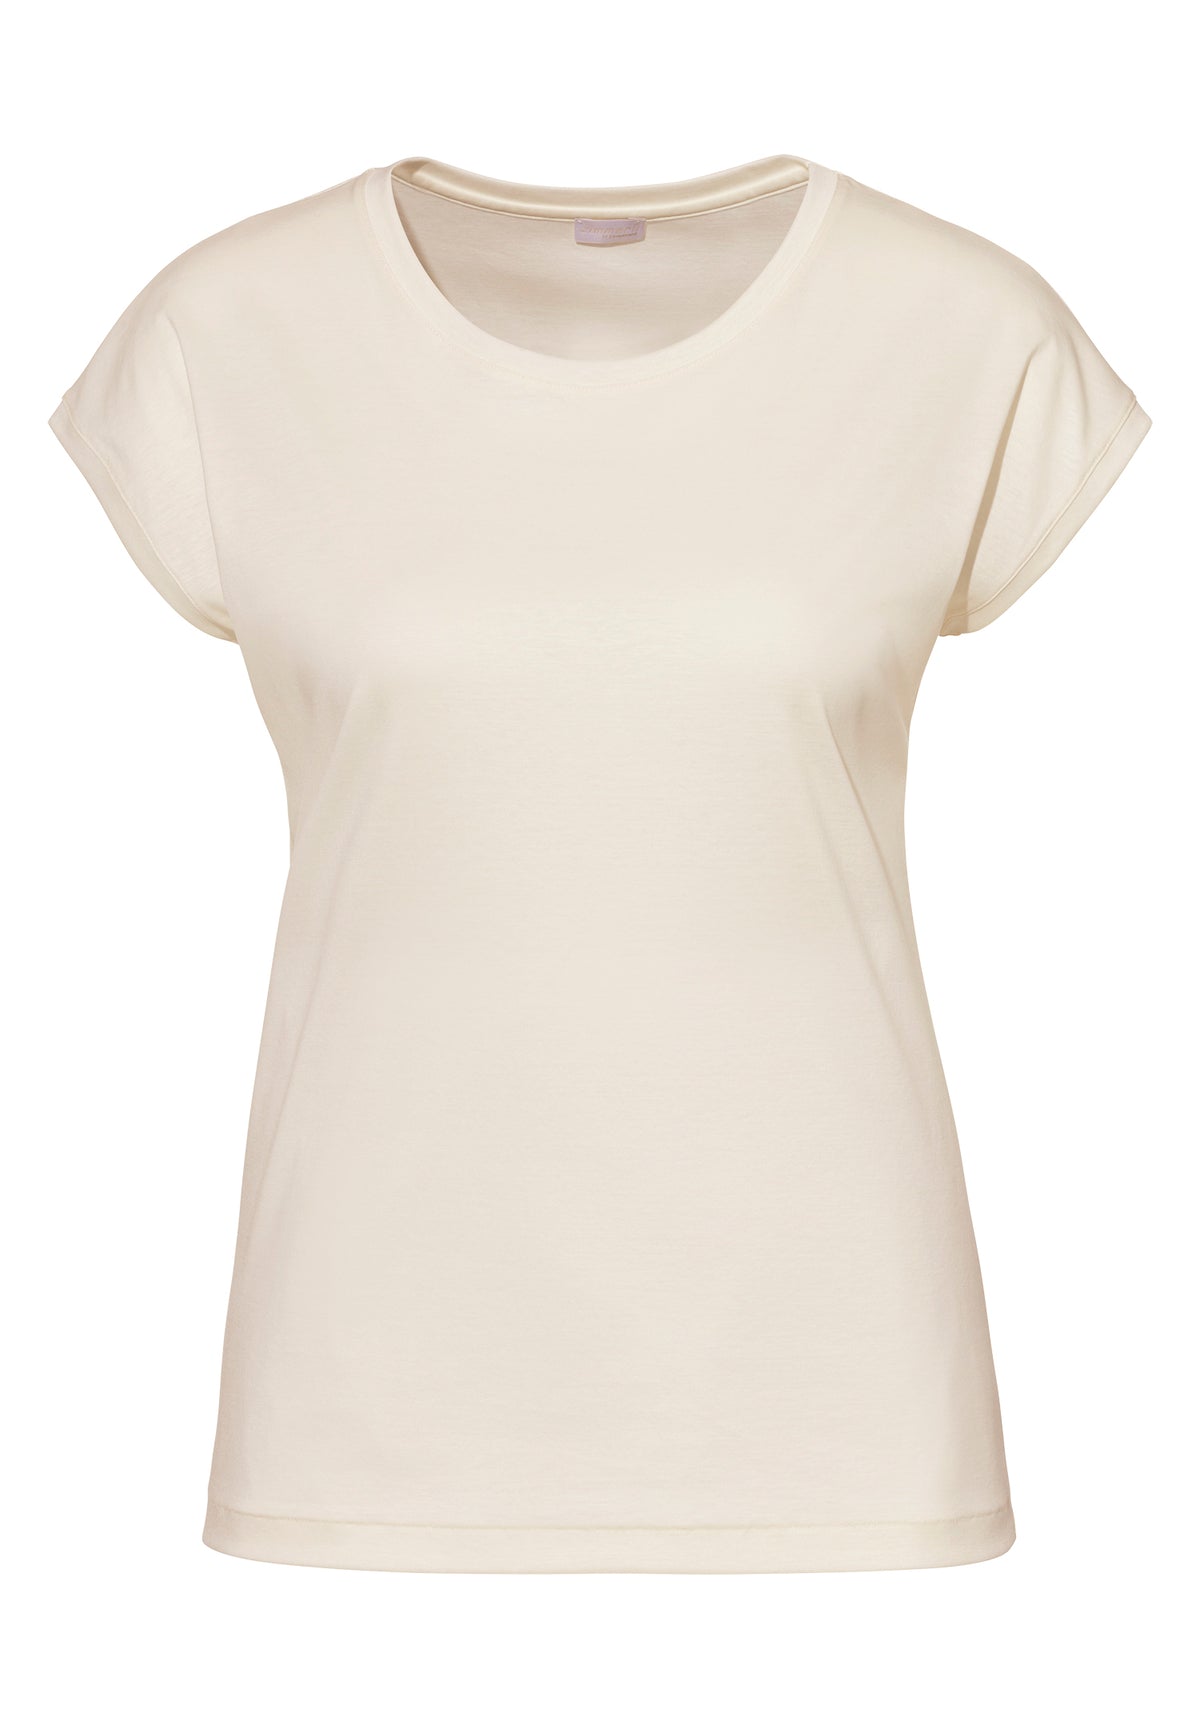 Sea Island | T-Shirt Short Sleeve - cloud white